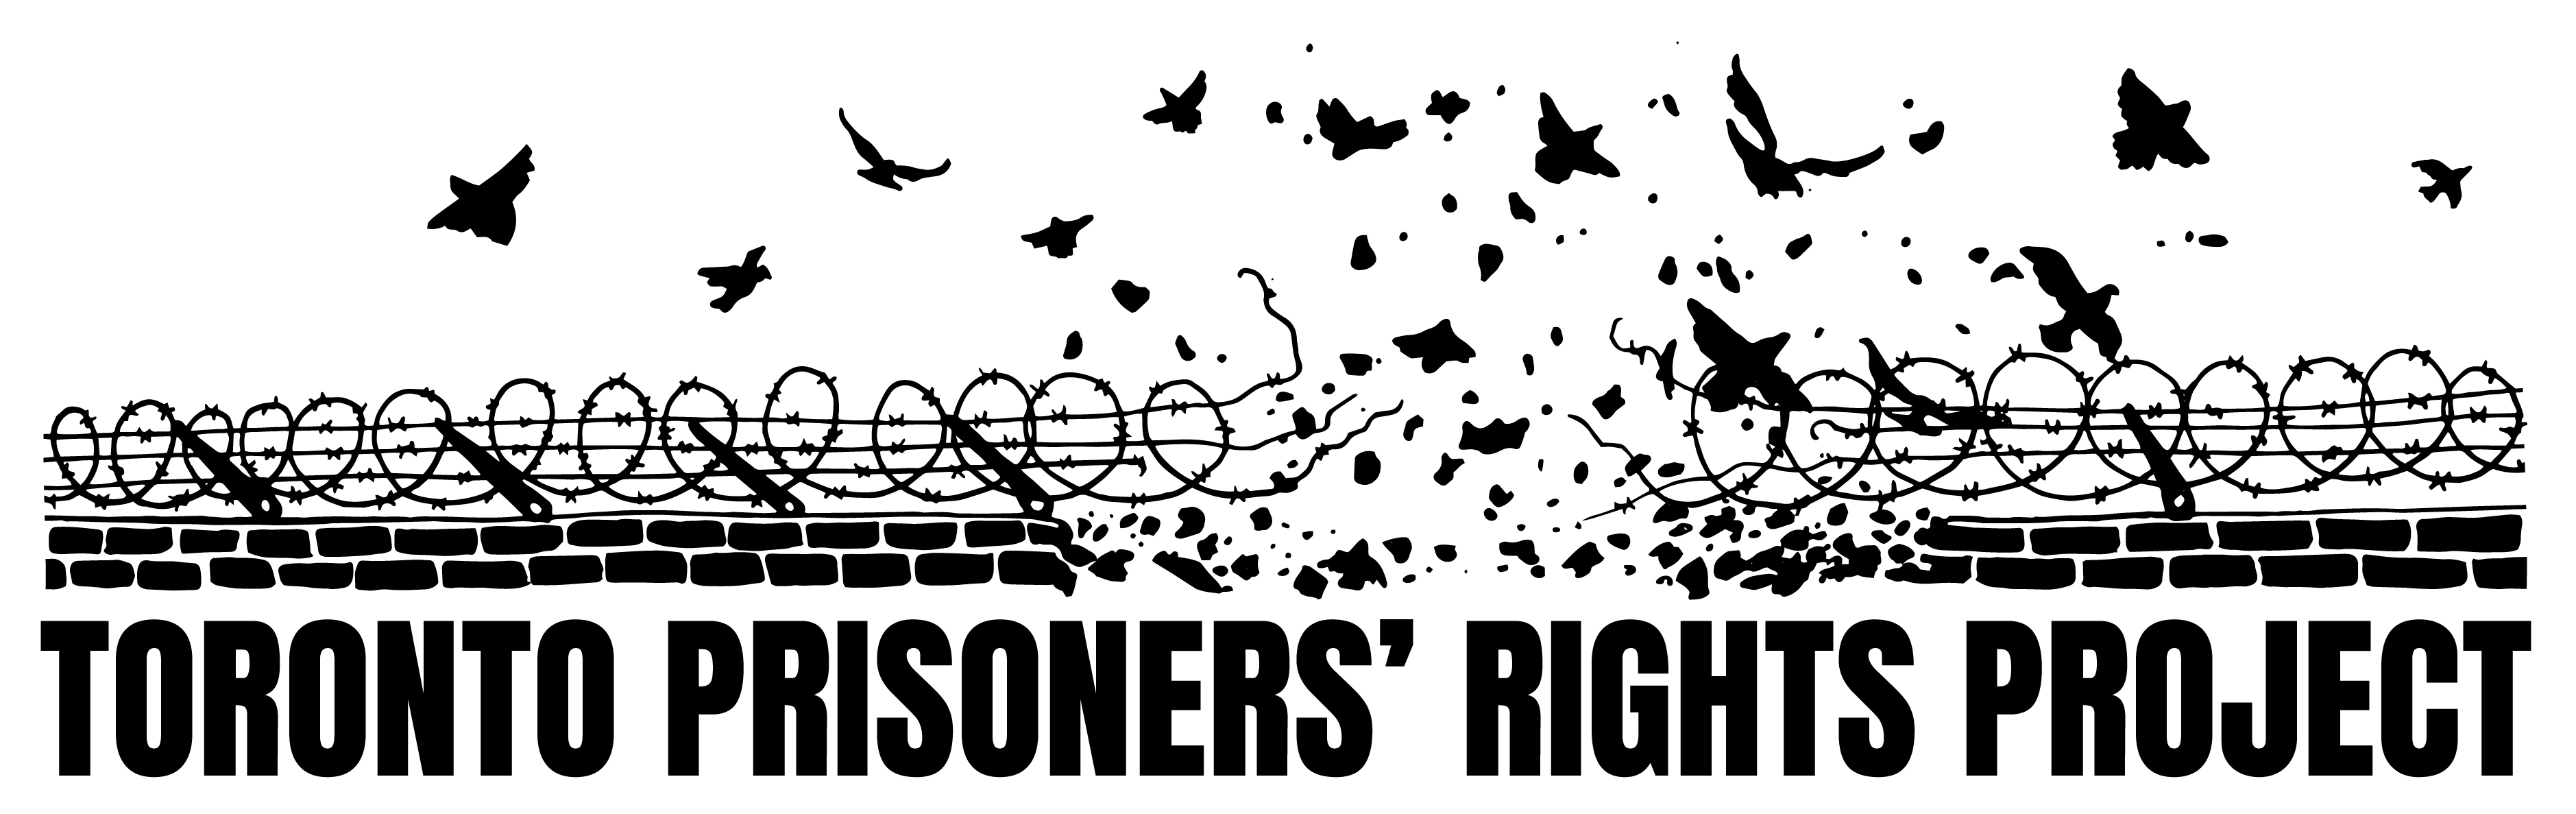 Toronto Prisoner's Rights Project organization logo